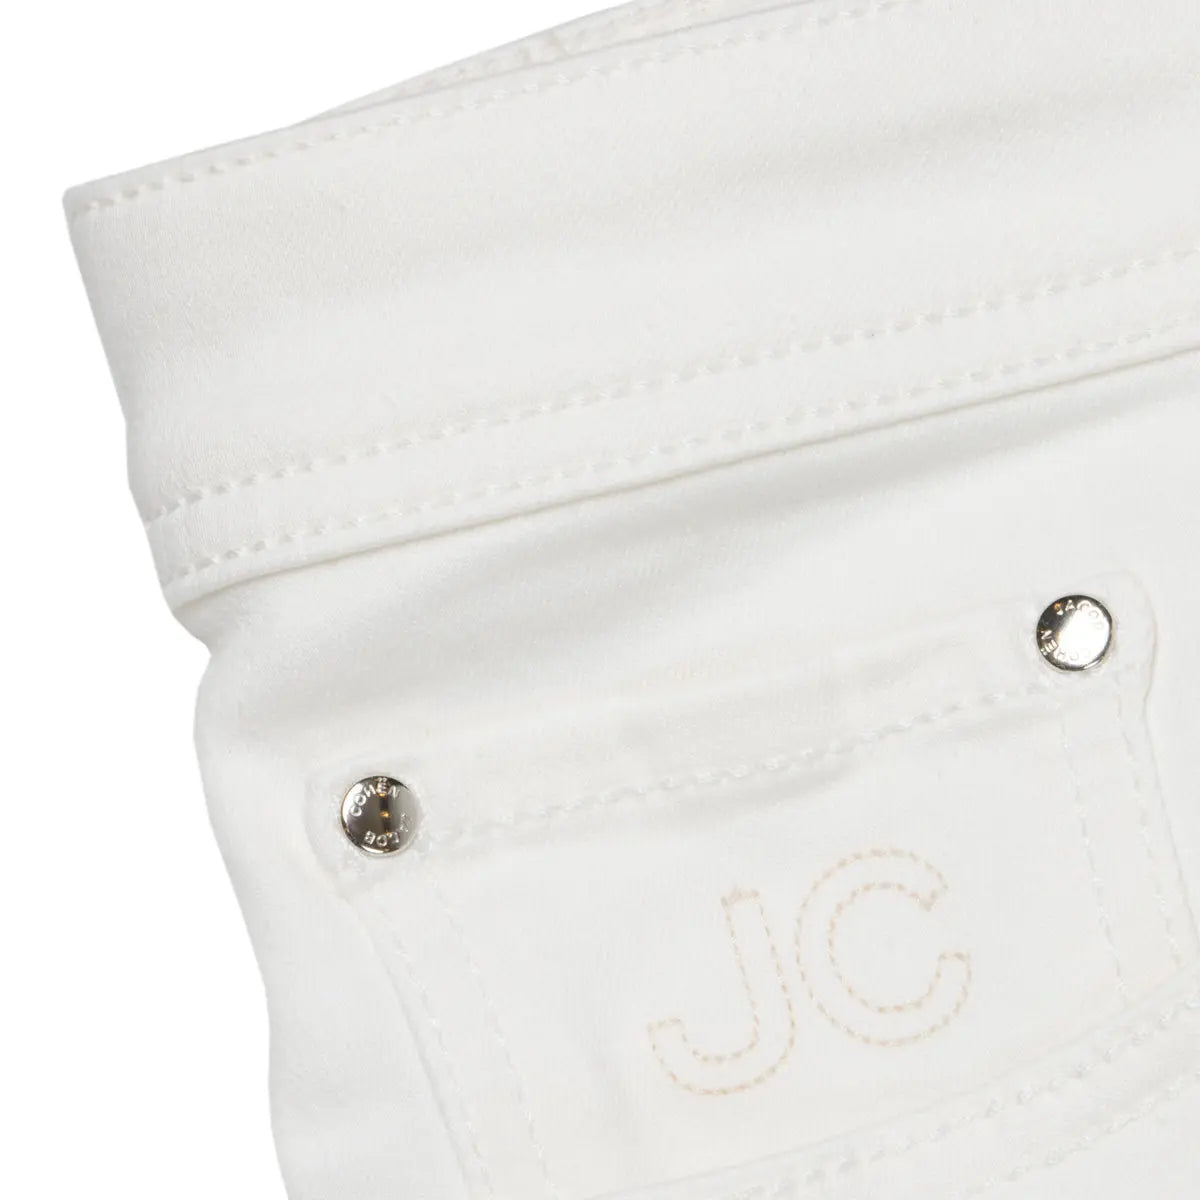 White 'Bard' Stretch Slim Fit Jeans  Jacob Cohën   